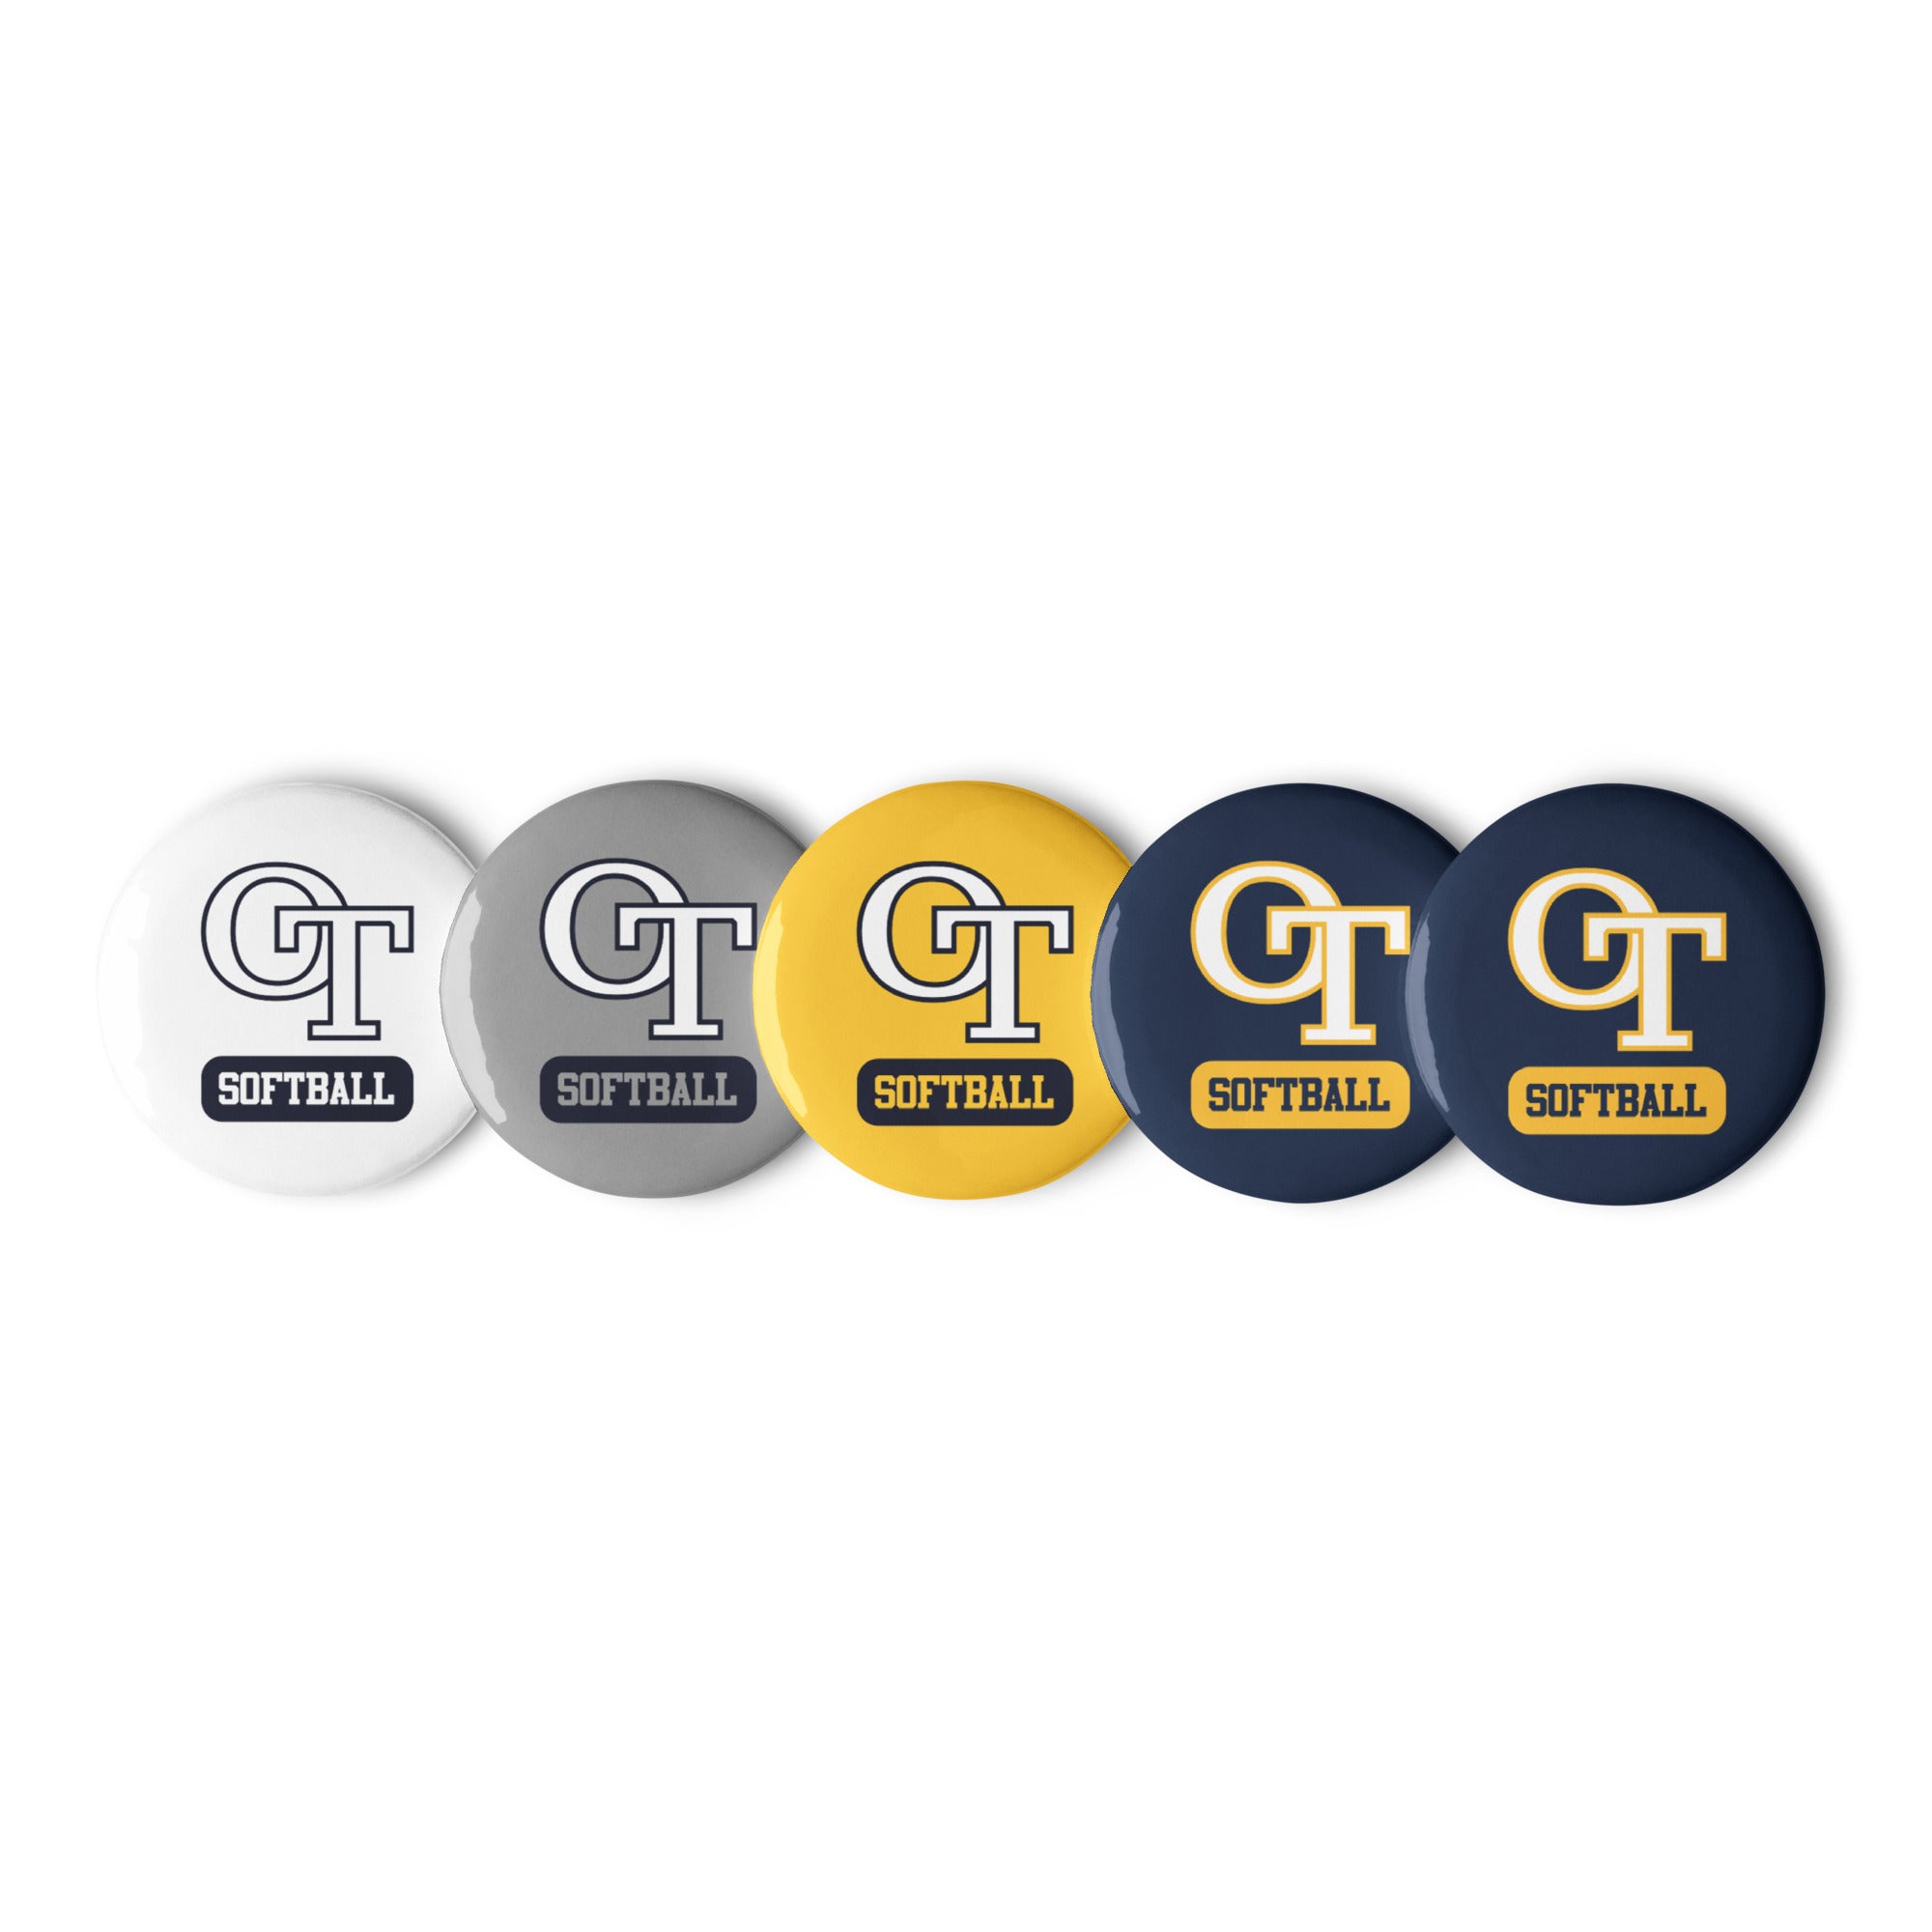 OT Baseball and Softball League - Softball Set of pin buttons